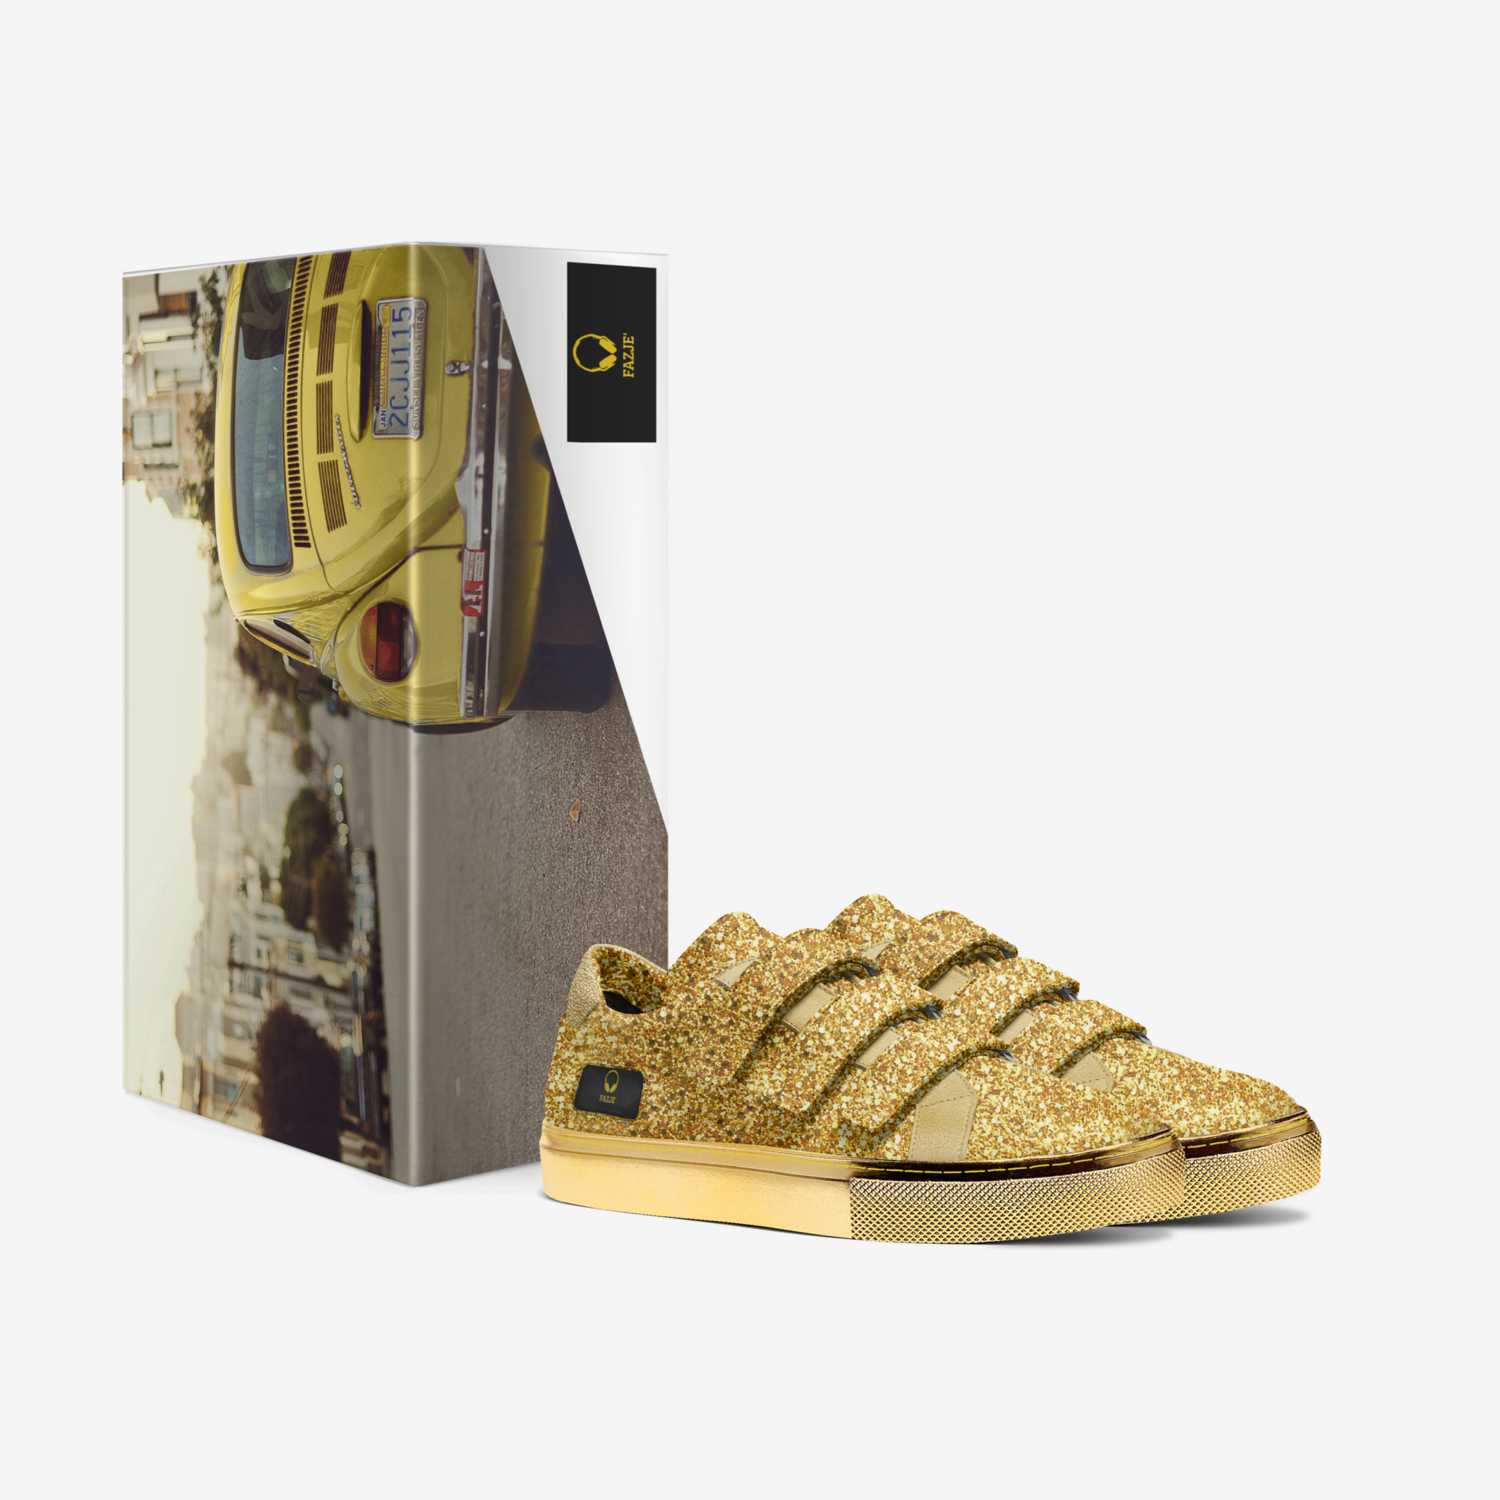 Fazje' custom made in Italy shoes by Faz Rahmon | Box view